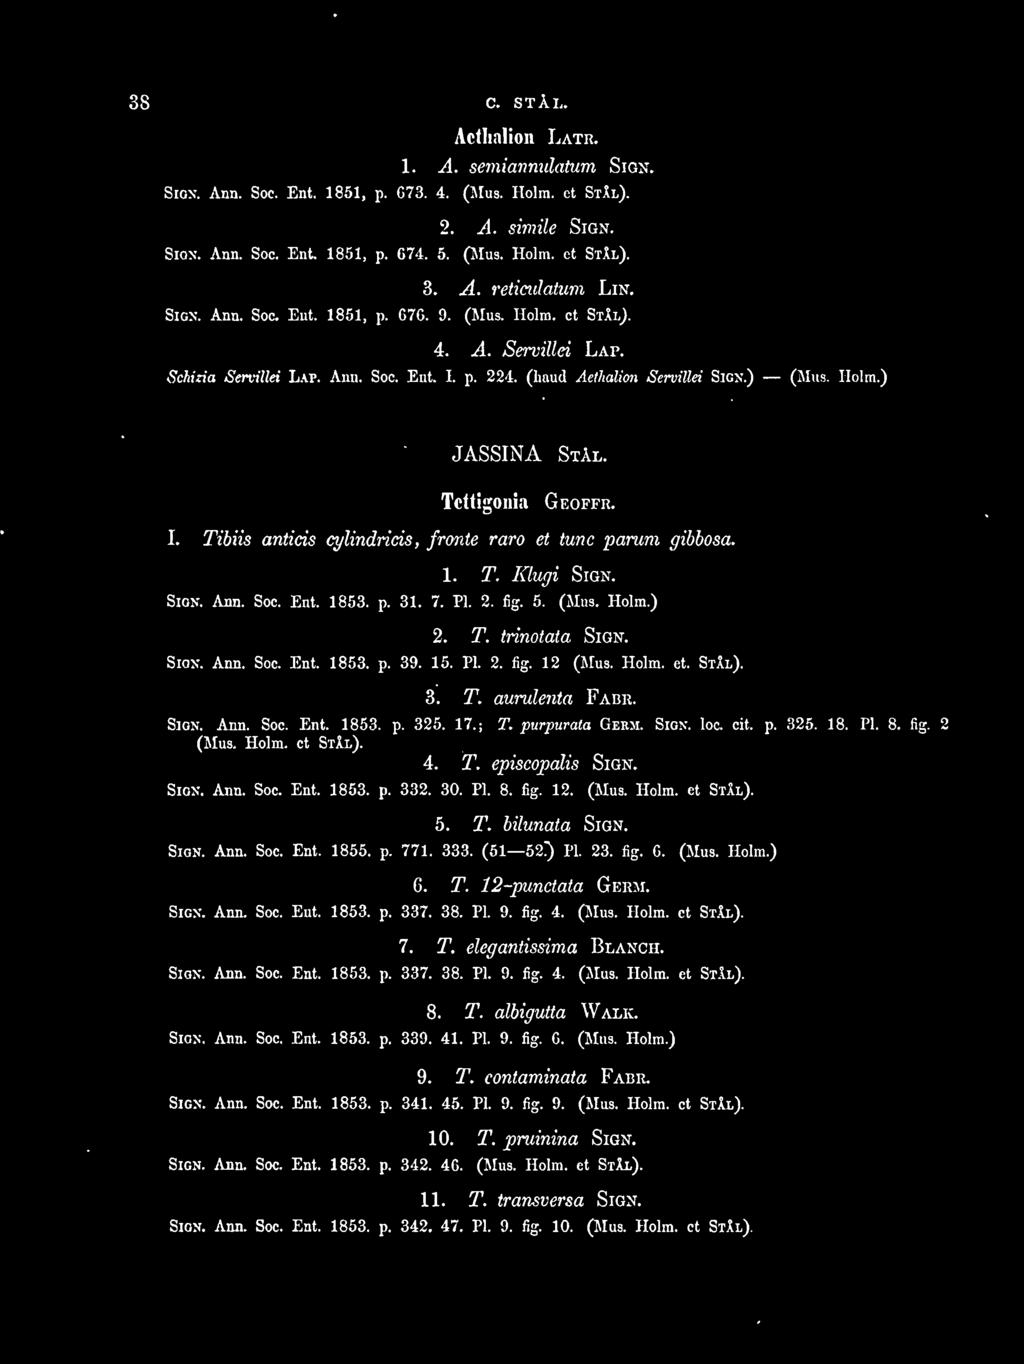 I. Tibiis anticis cylindricis, fronte raro et tune parum gibbosa. 1. T. Klugi SIGN. SIGN. Ann. Soc. Ent. 1853. p. 31. 7. PI. 2. fig. 5. (Mus. Holm.) 2. T. trinotata SIGN. SIGN. Ann. Soc. Ent. 1853. p. 39.